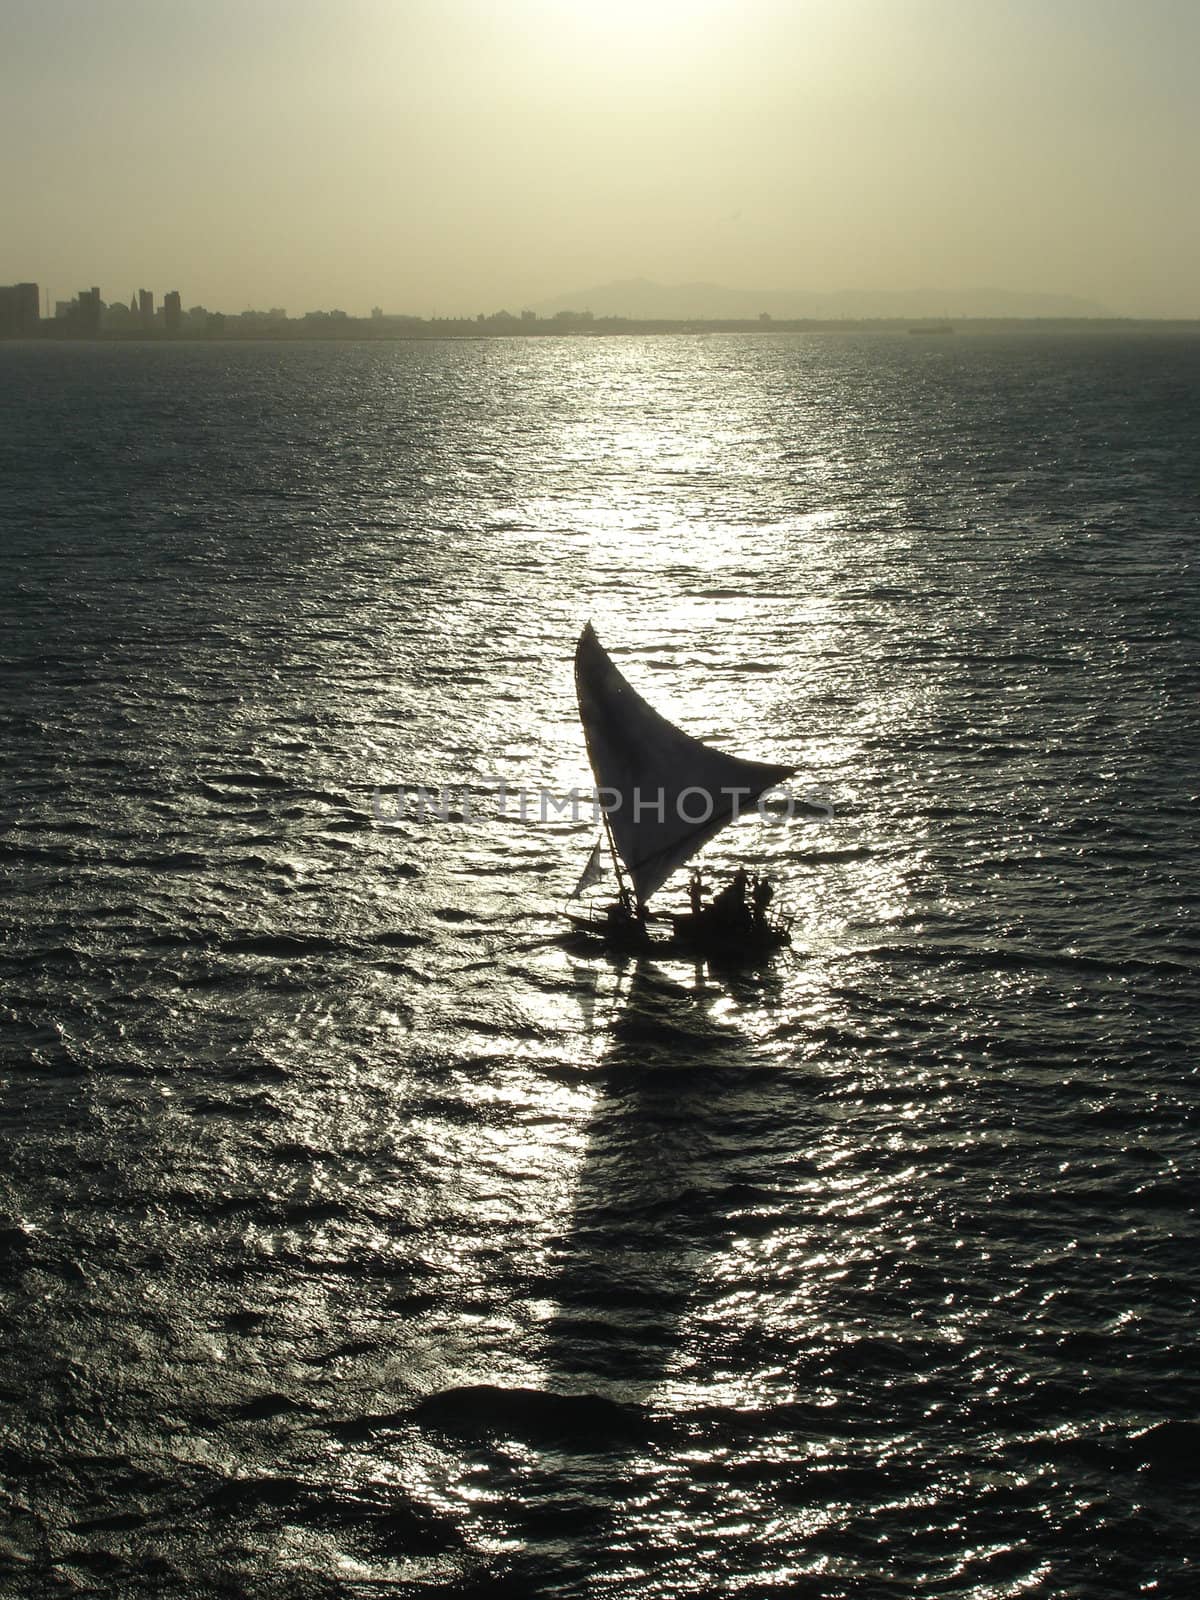 Sail Boat Silhouette by Daniel_Wiedemann